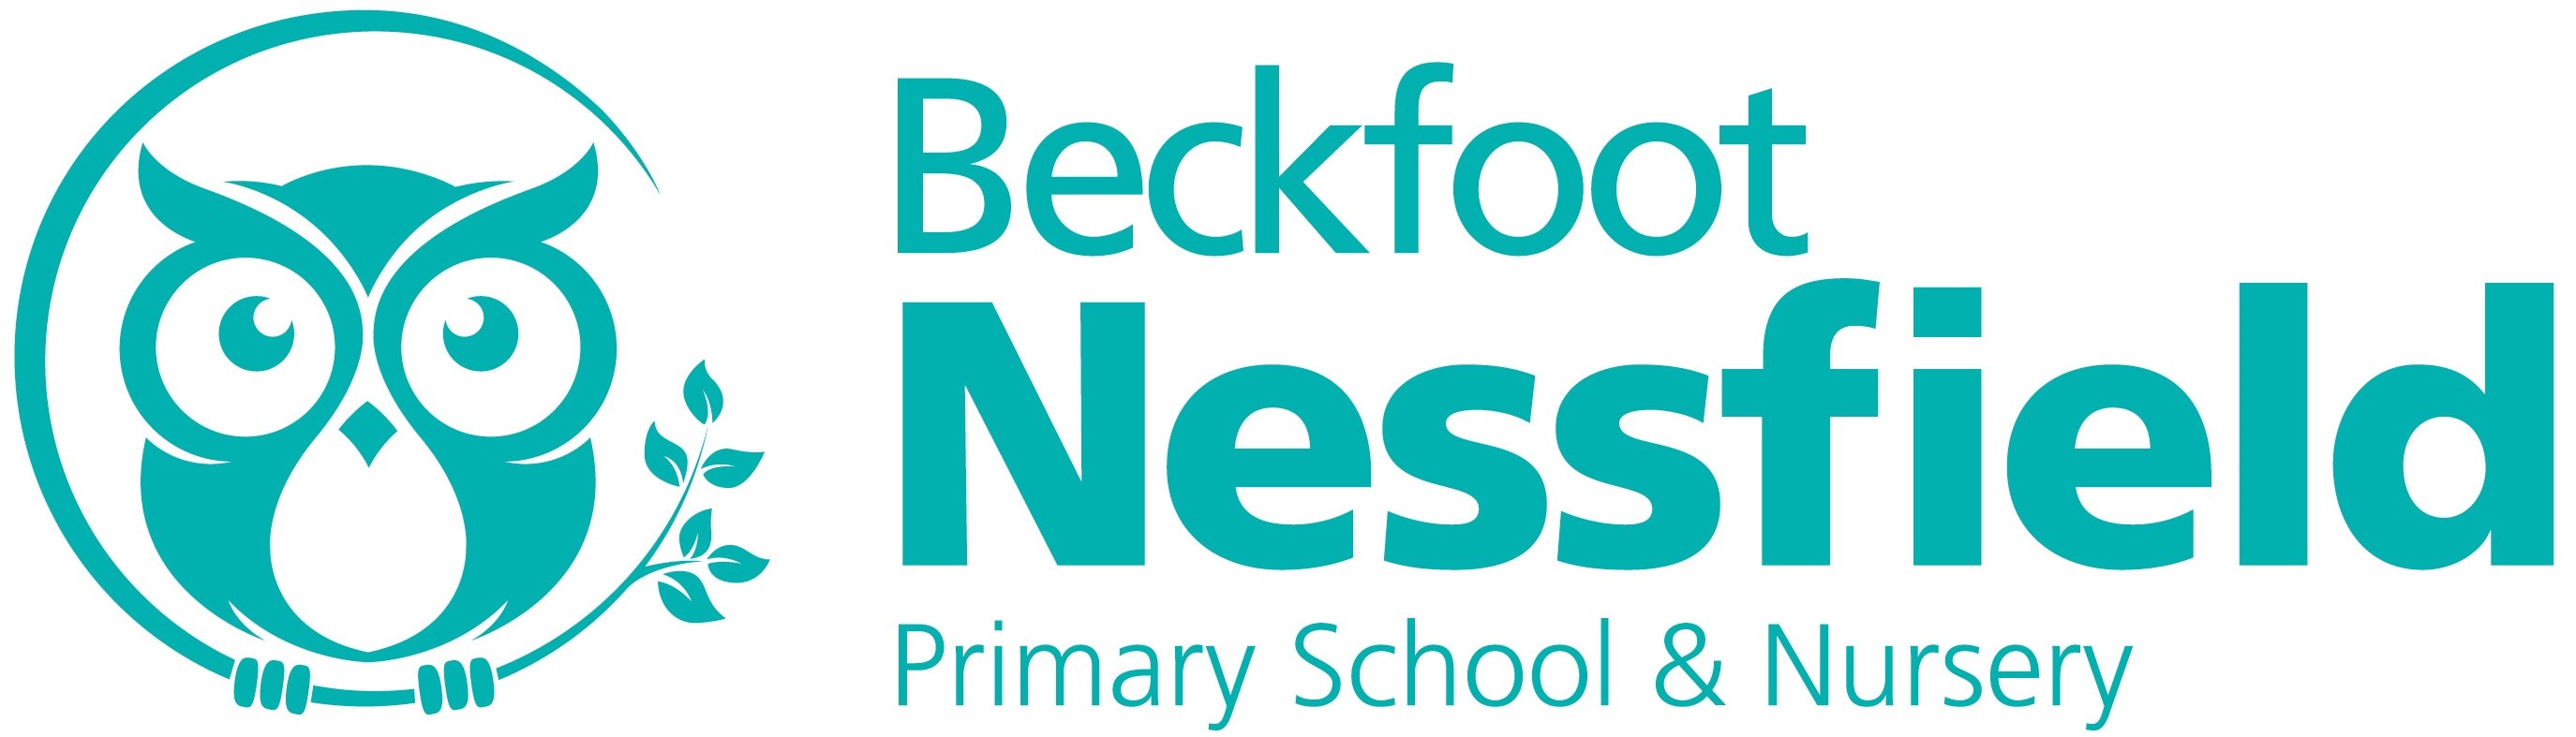 Beckfoot Nessfield logo